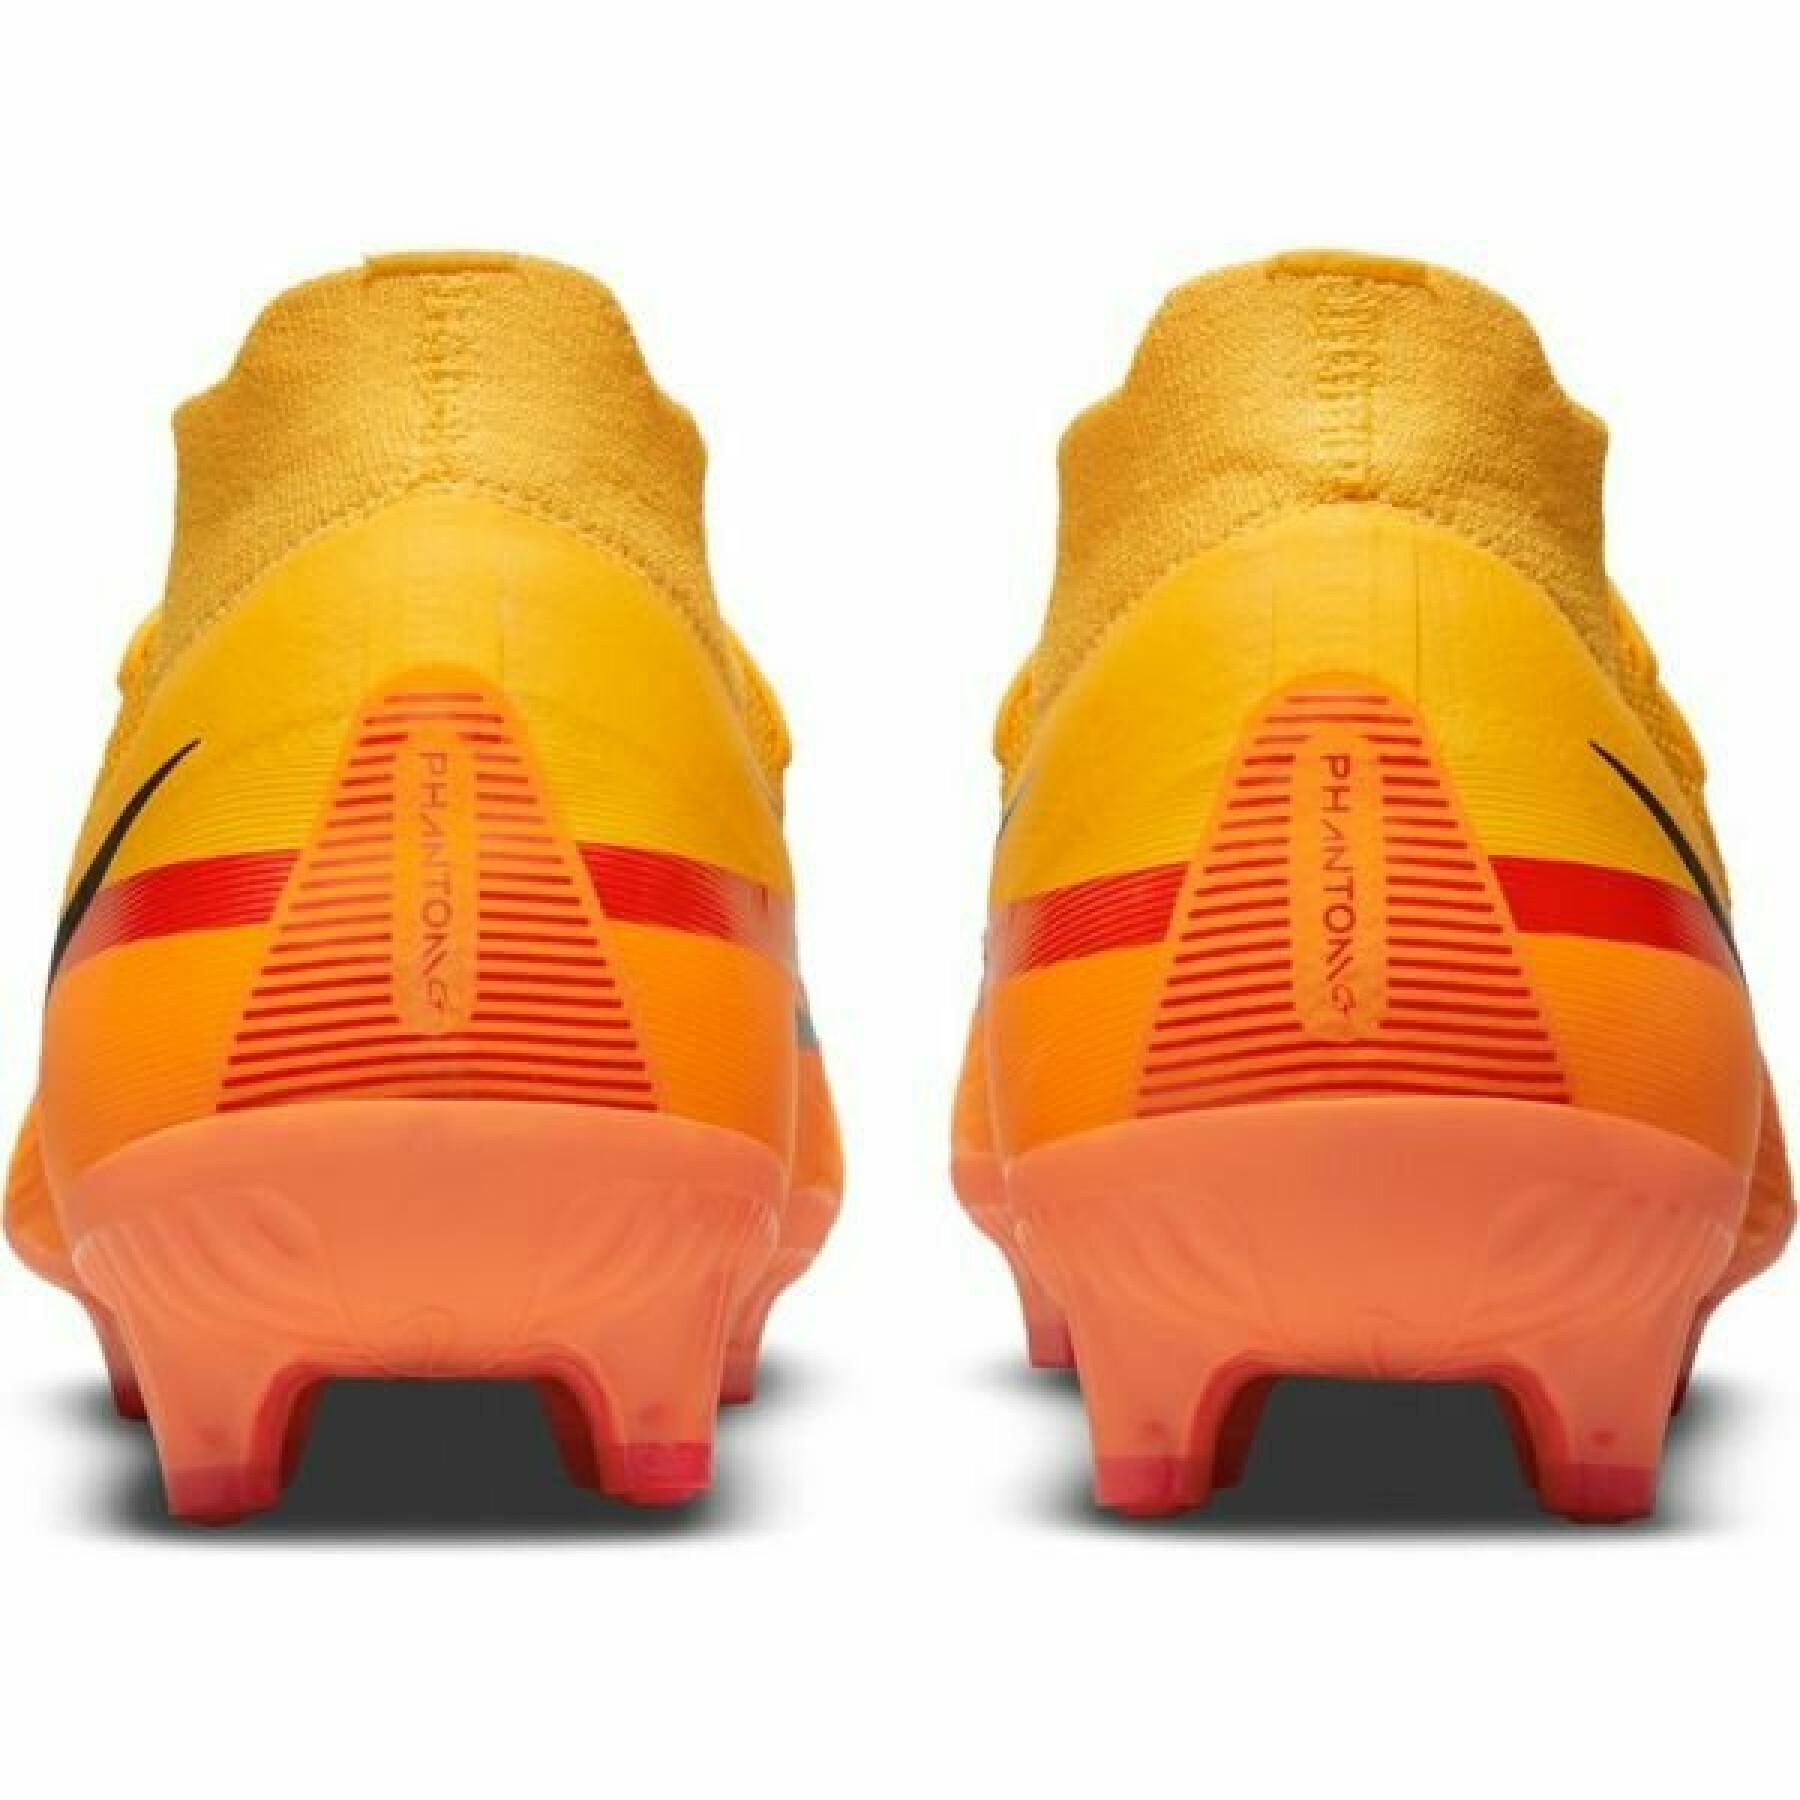 Botas de fútbol Nike Phantom GT2 Pro Dynamic Fit FG